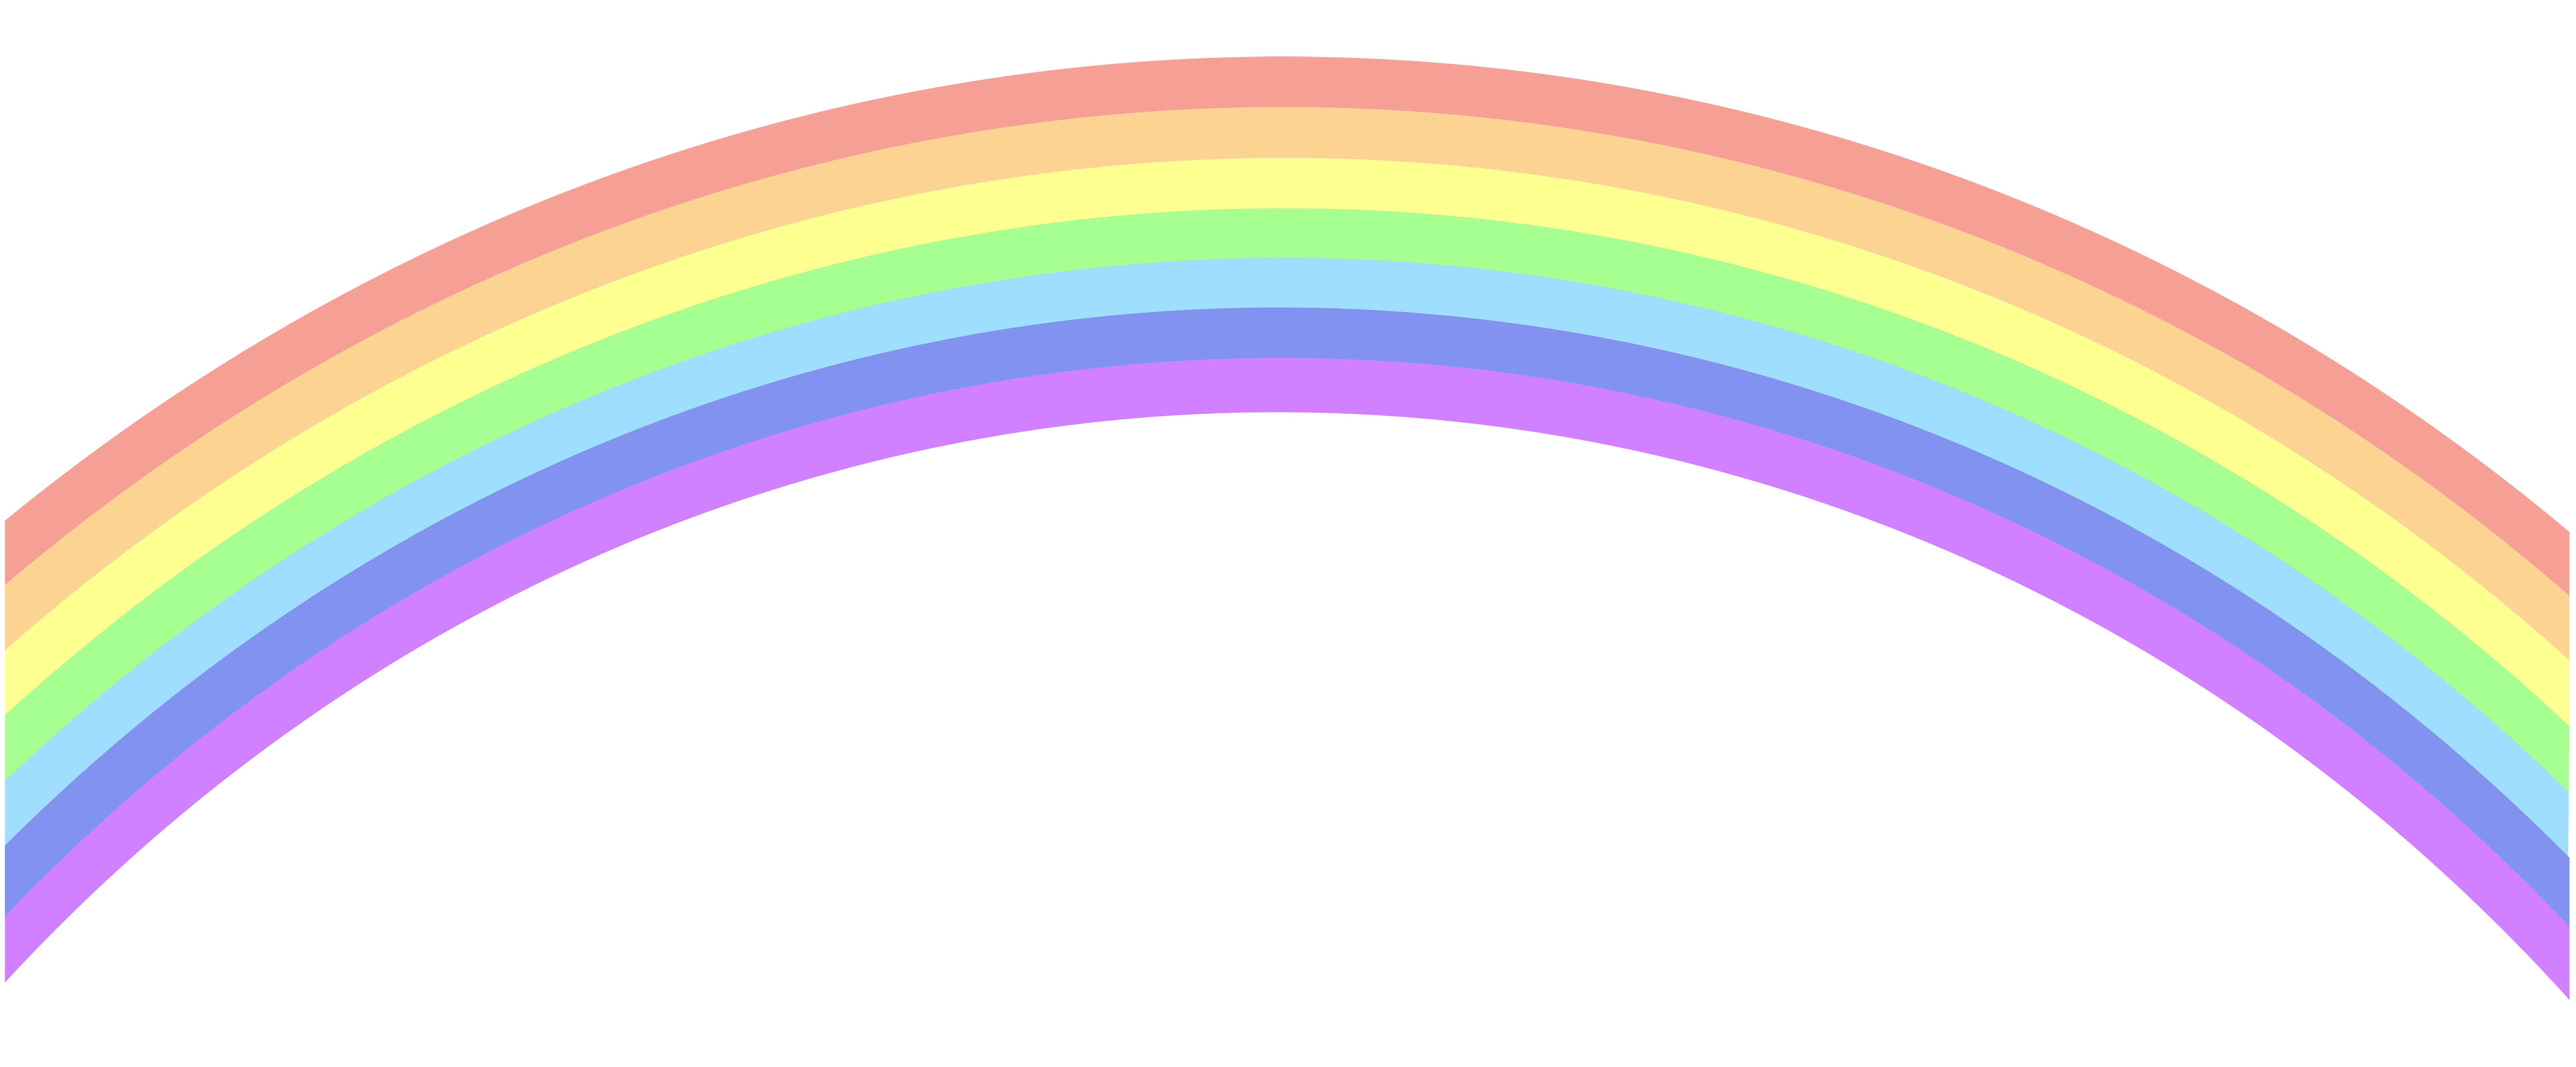 Rainbow clip art image